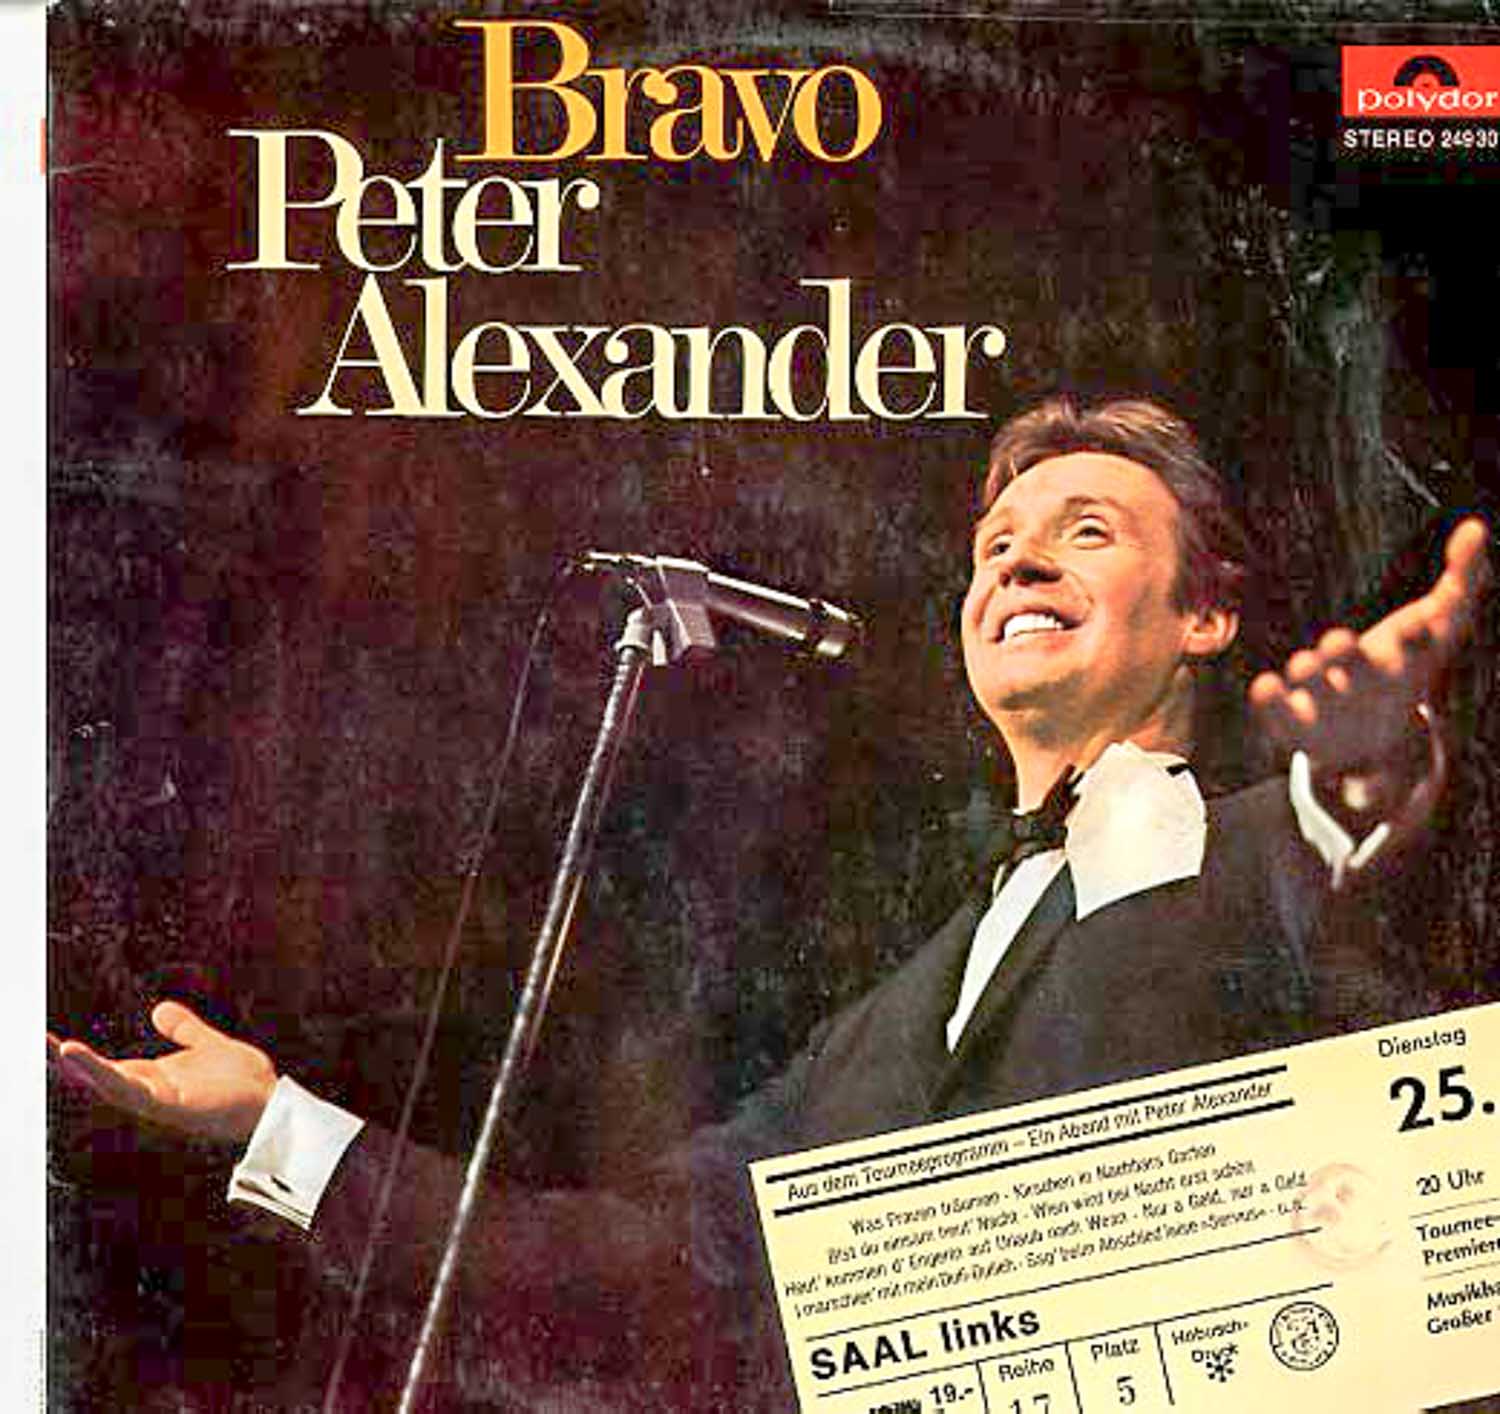 Peter Alexander  Bravo Peter Alexander (249 301)  *LP 12'' (Vinyl)*. 